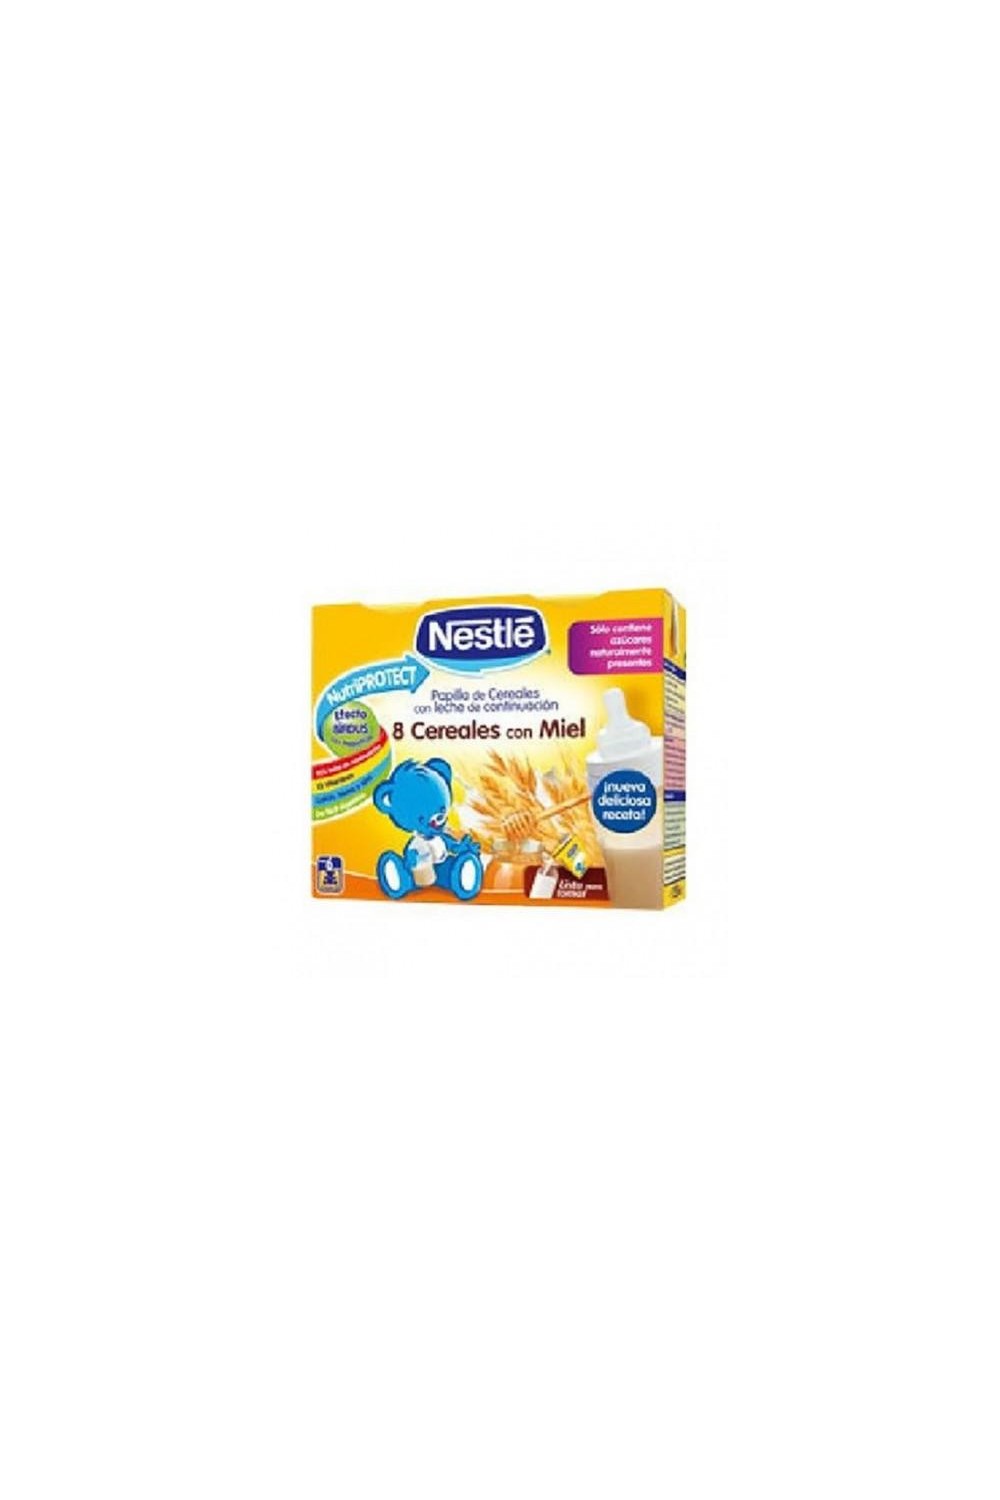 Nestle Nestlé Milk and Cereal Pajamas With Honey 2 X 250ml